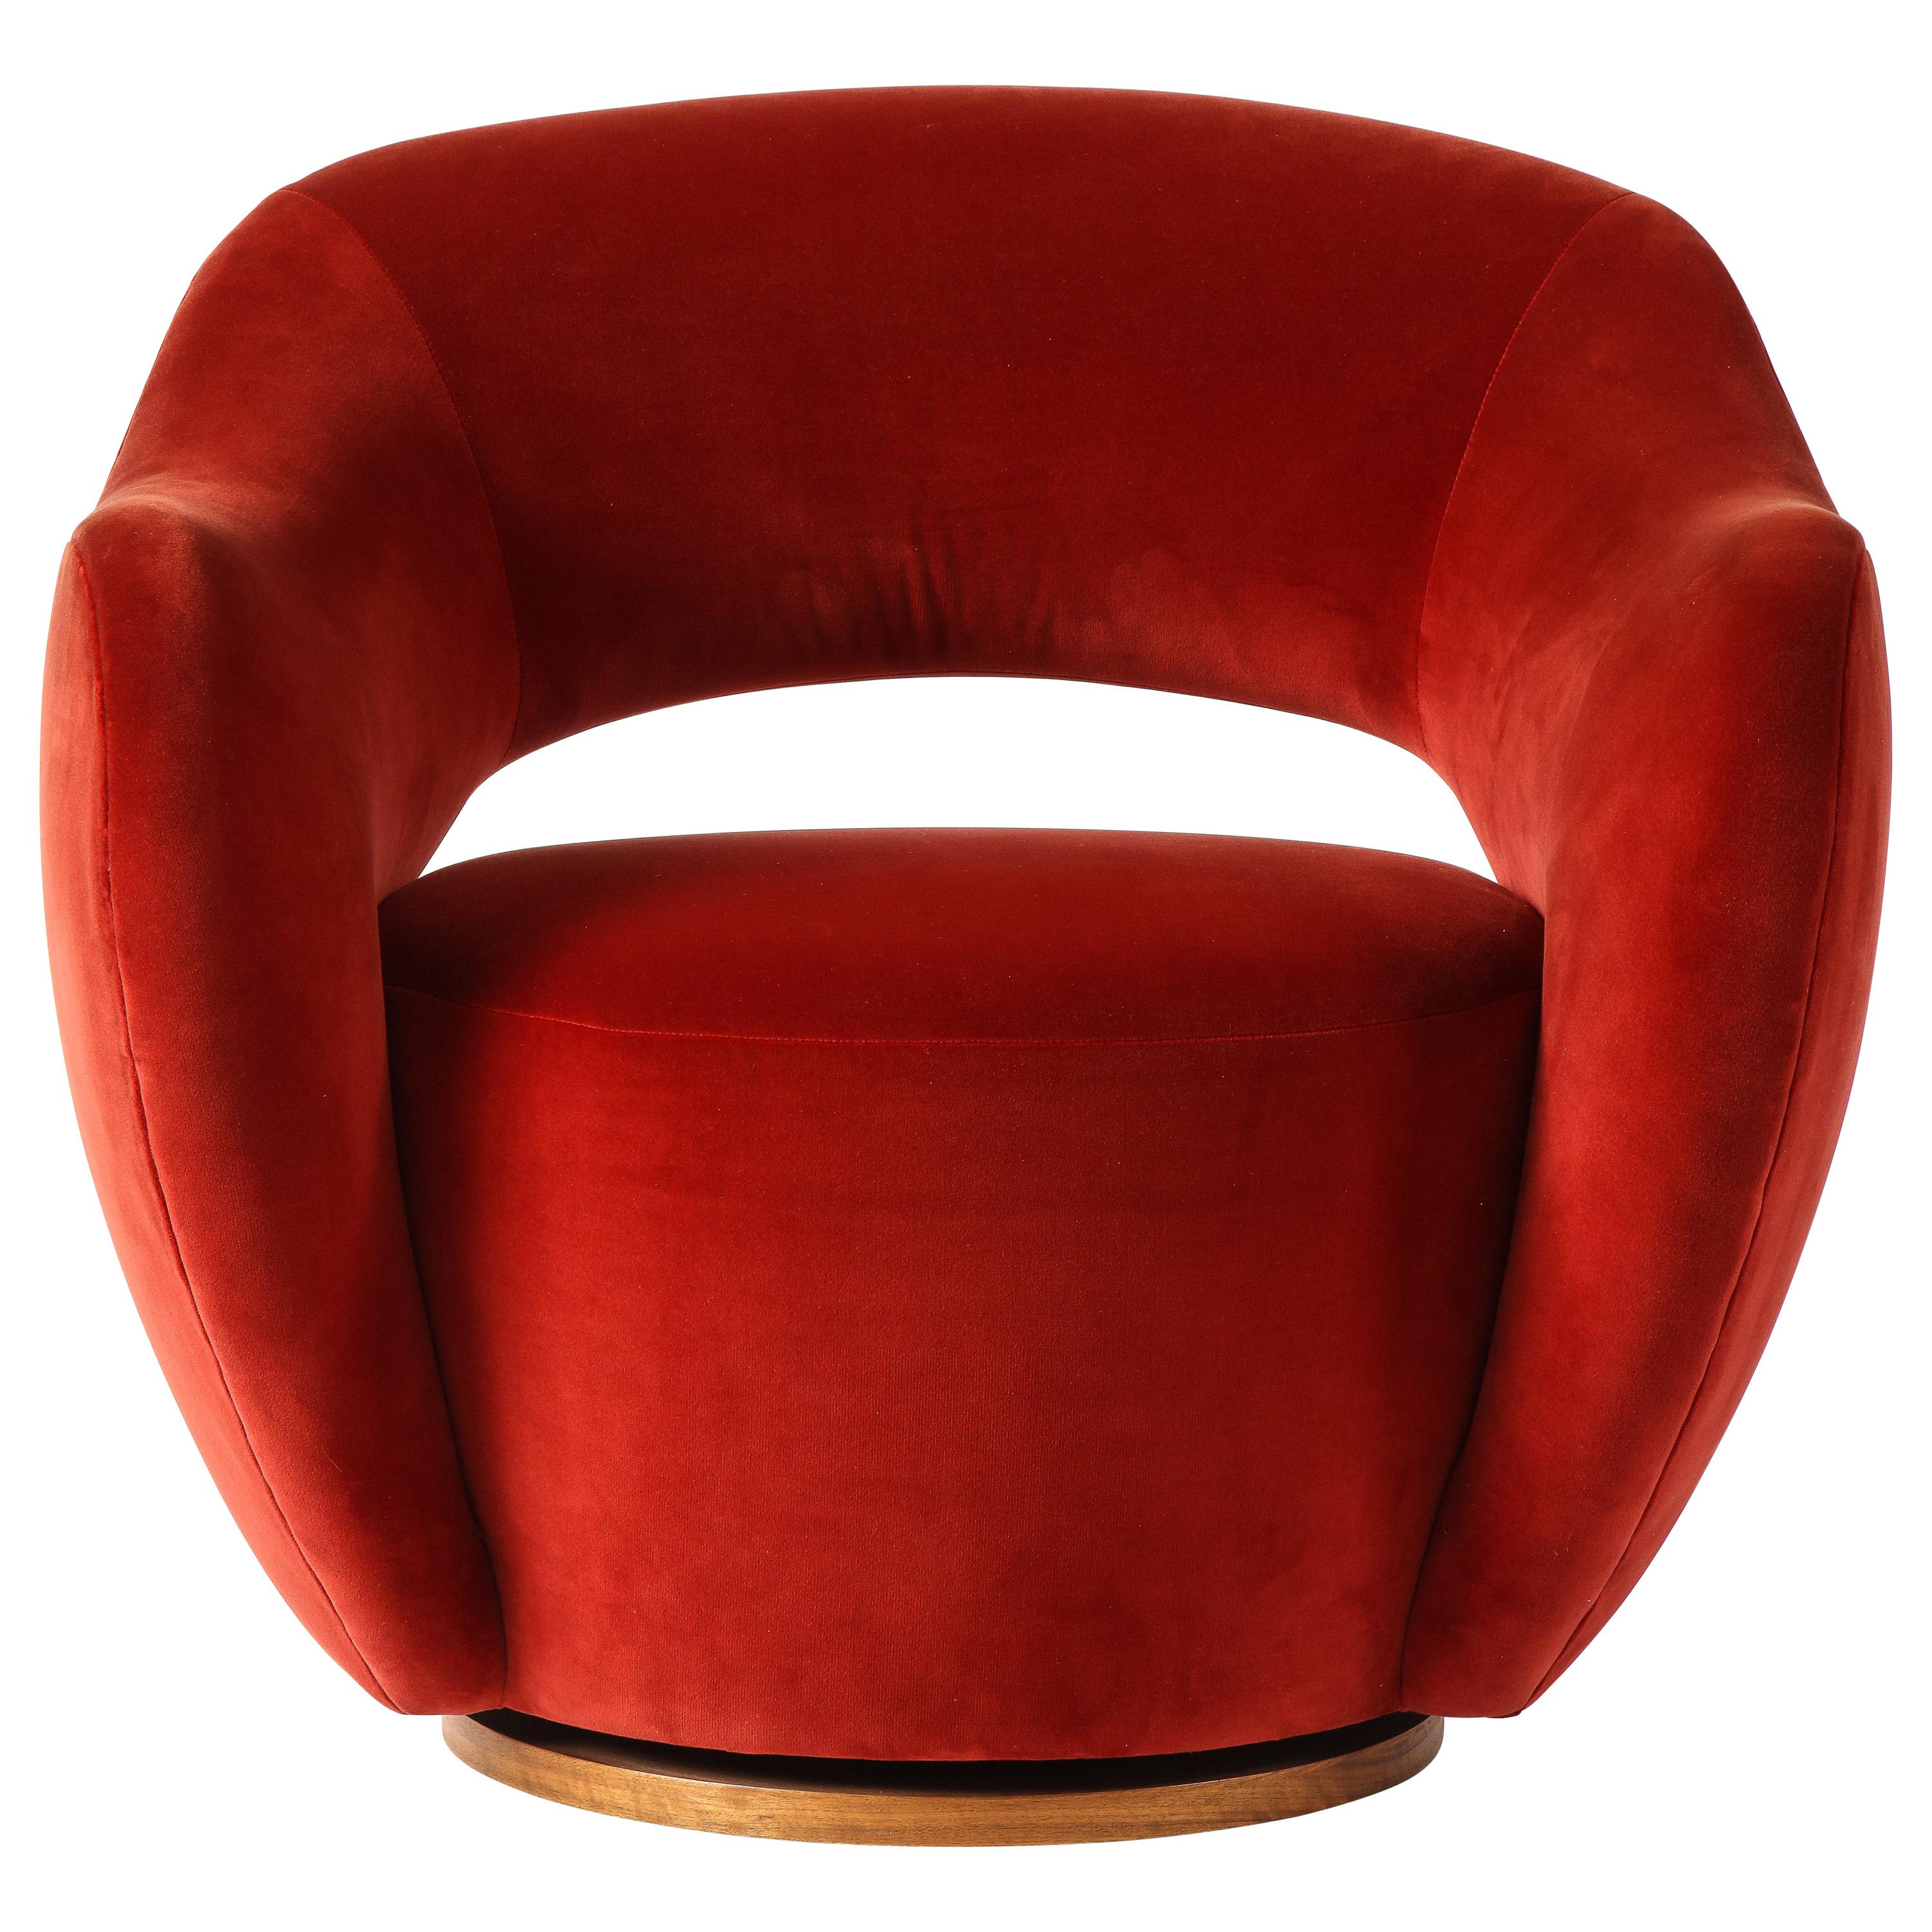 Vladimir Kagan Wysiwyg Chair with Red Upholstery & Natural Walnut Swivel Base